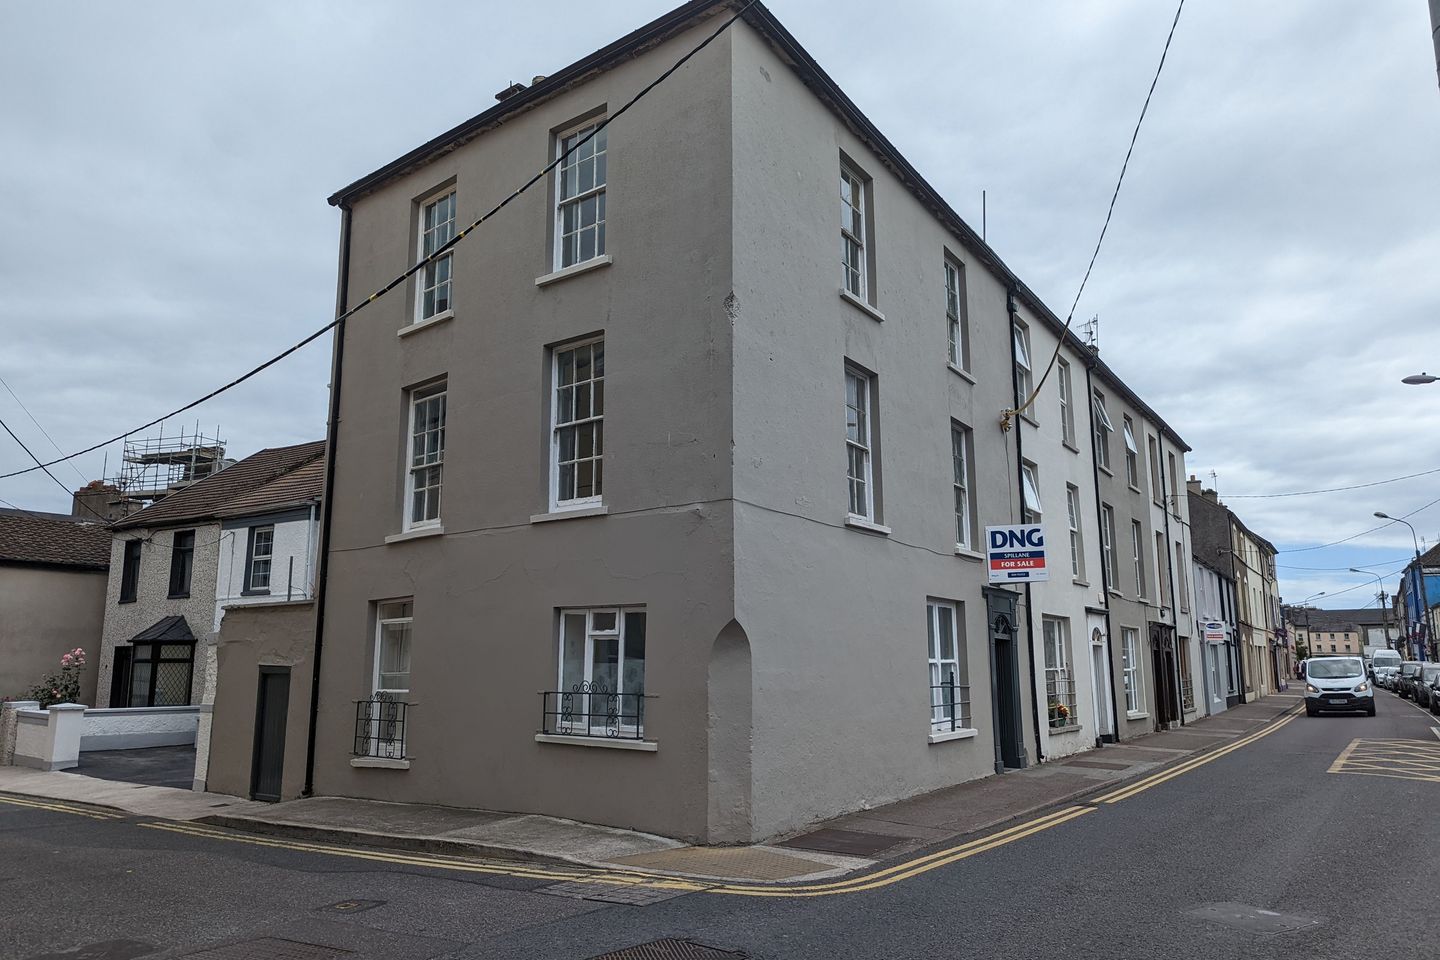 1 Friar Street, Youghal, Co. Cork, P36C890